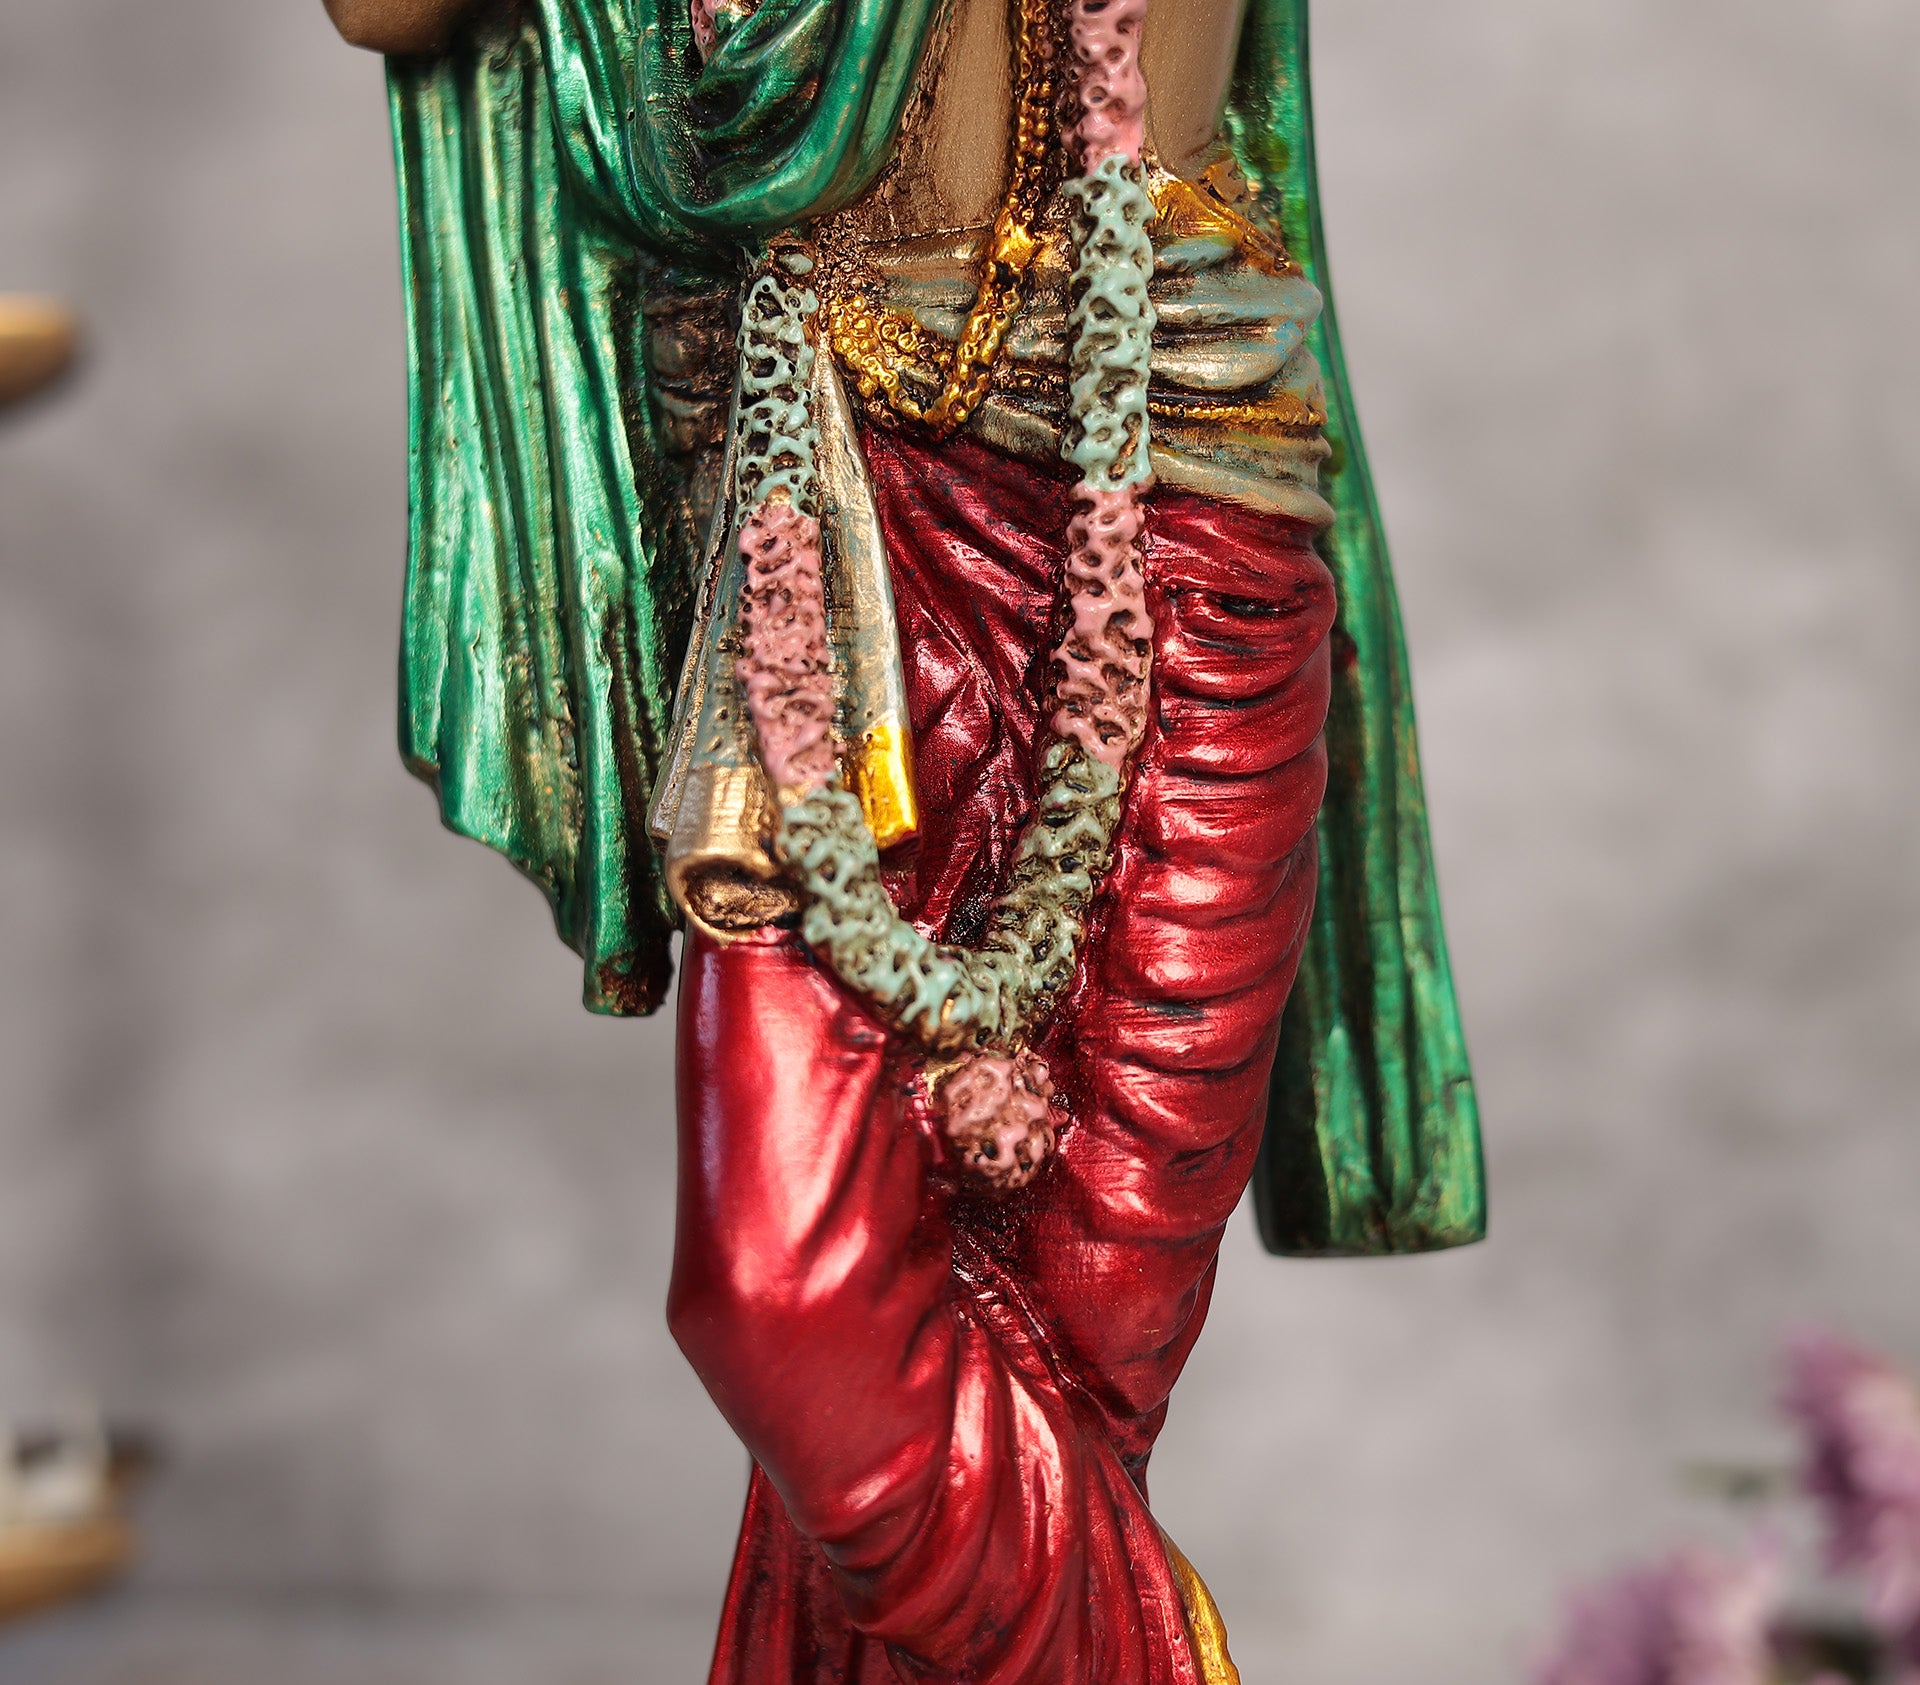 Flute Krishna Idol Symbol of love and Spiritual In 16"